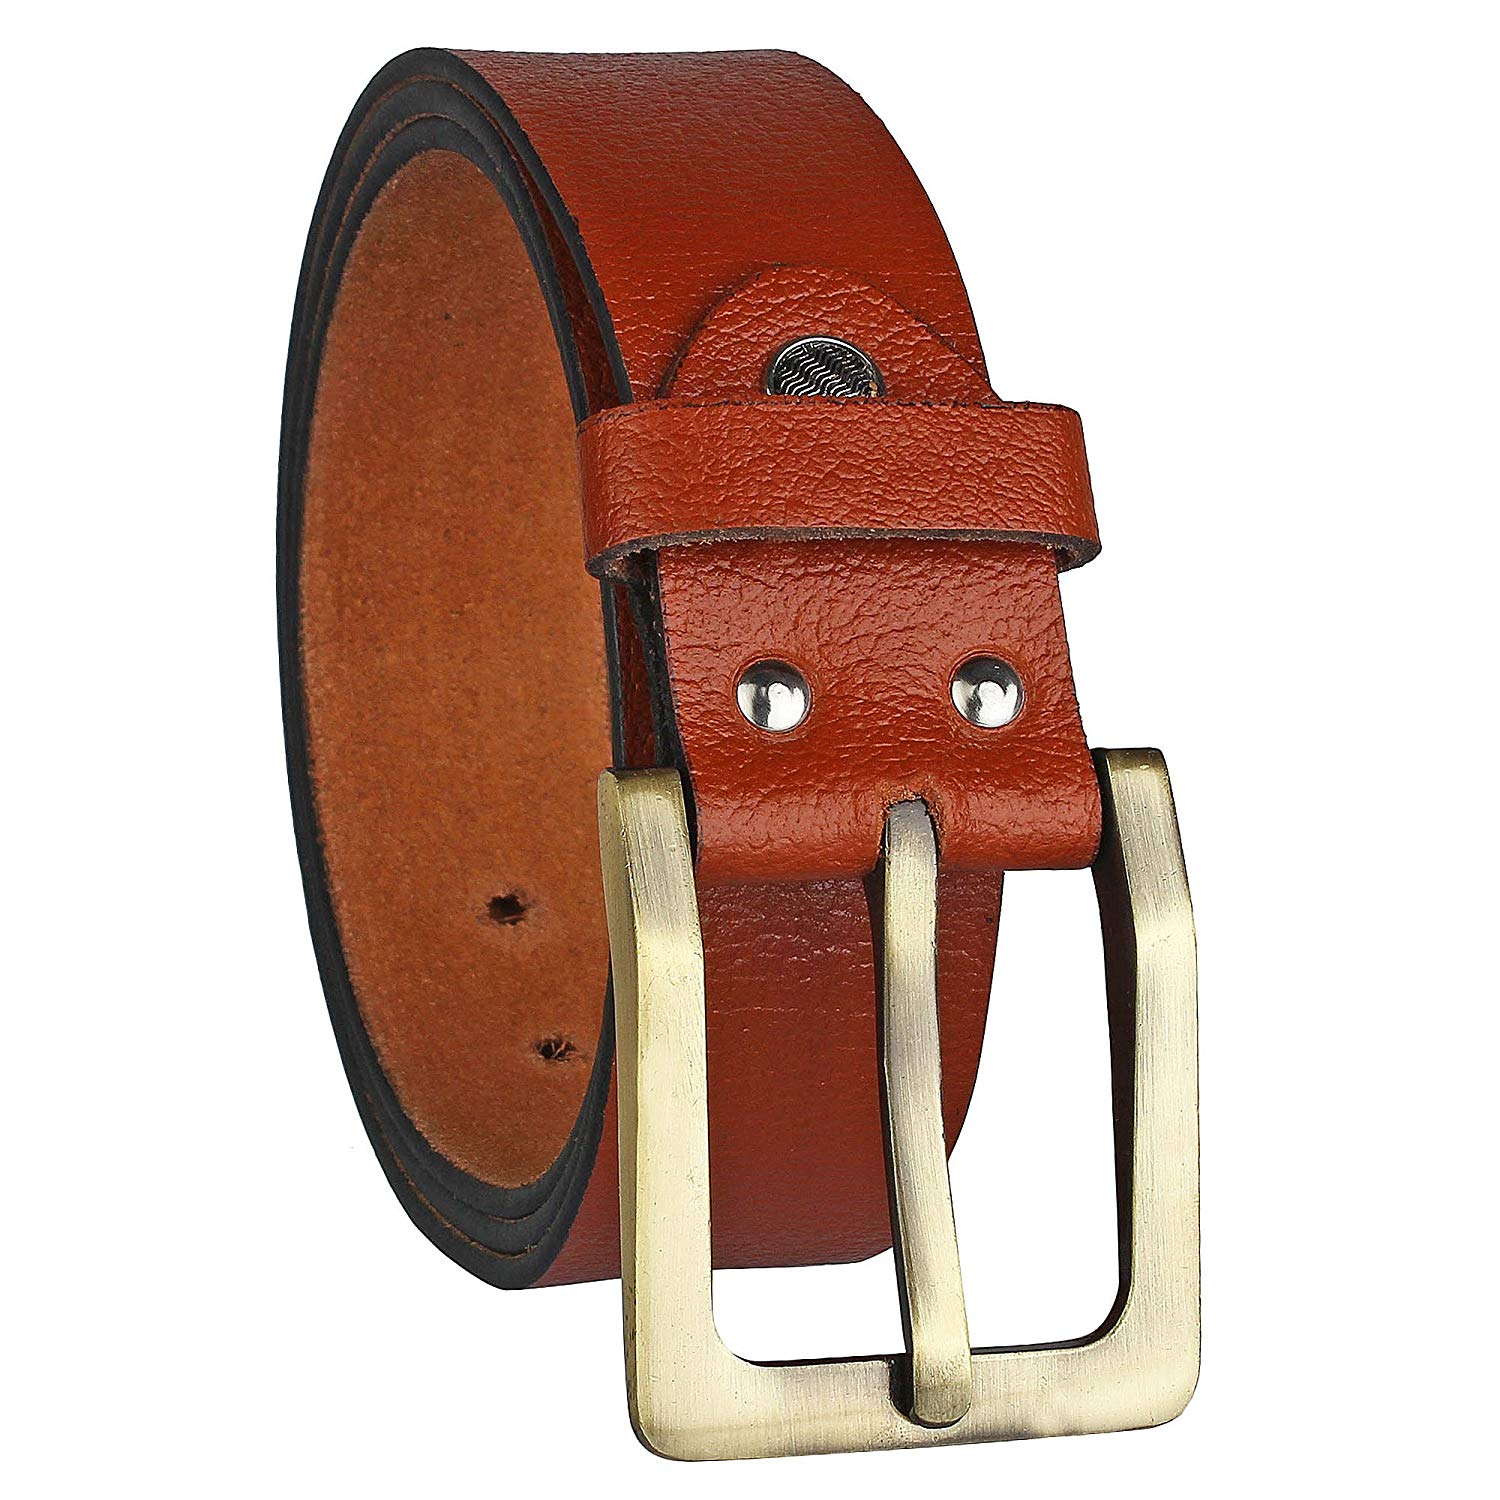 leather belt manufactures in Delhi